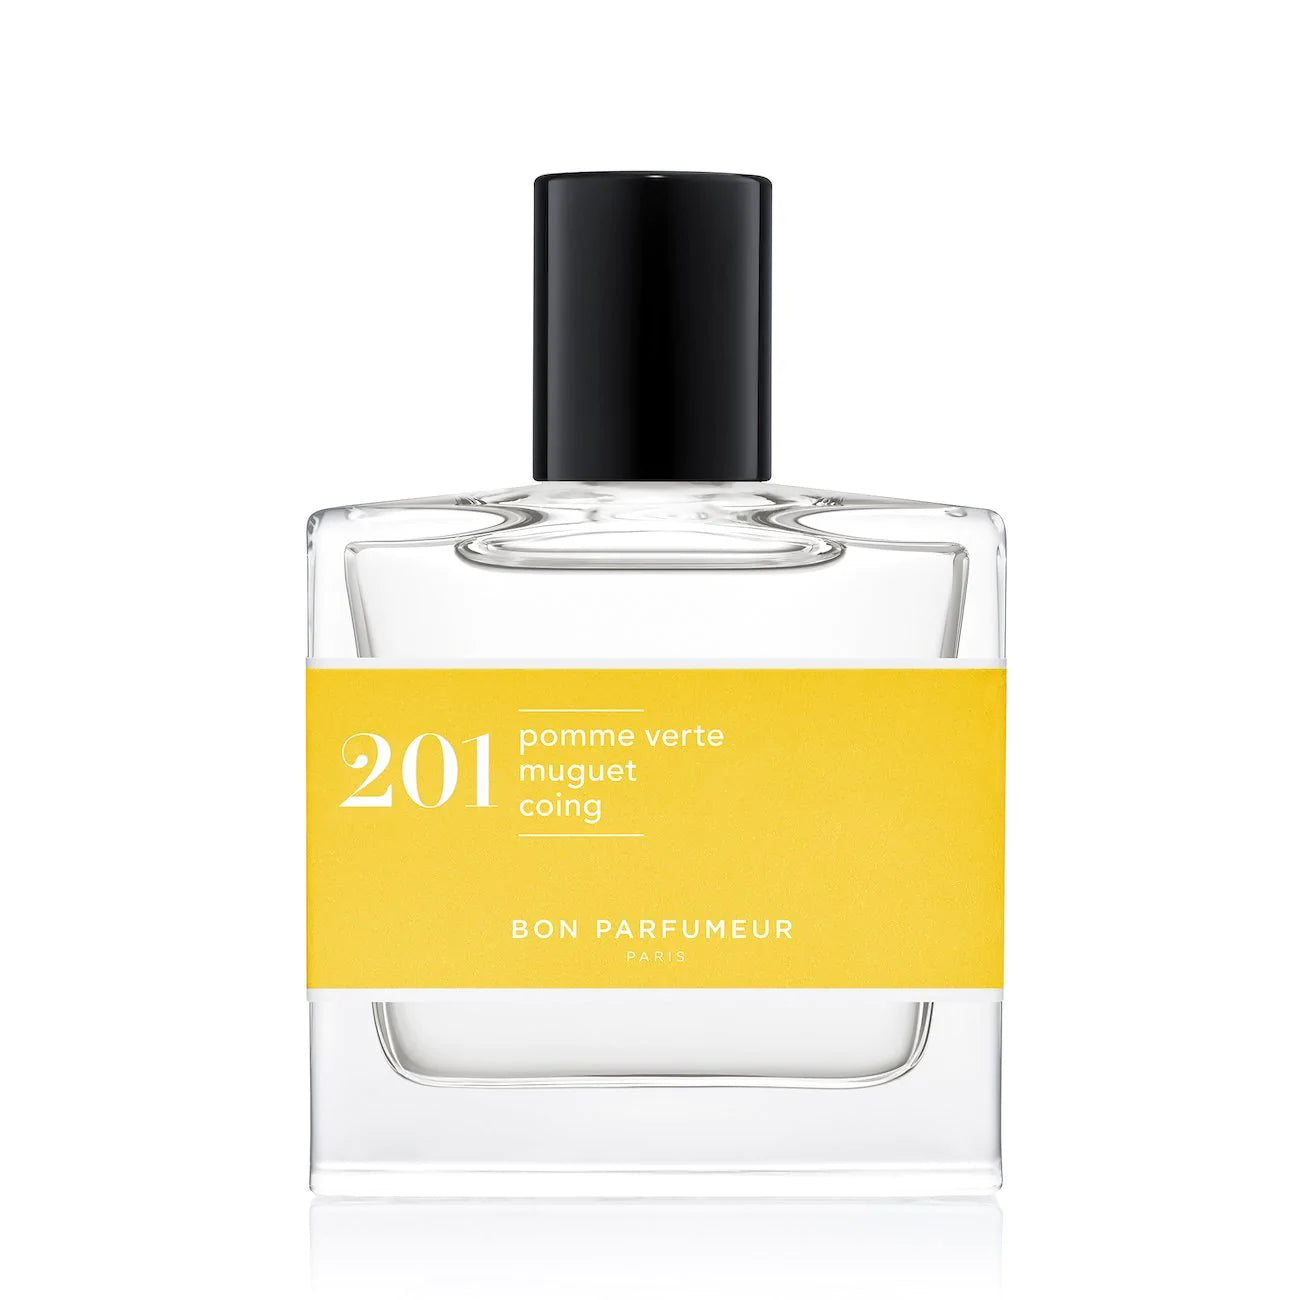 Eau Parfumee au the noir by Bvlgari For Men & Women EDC Spray Cologne 5oz  New